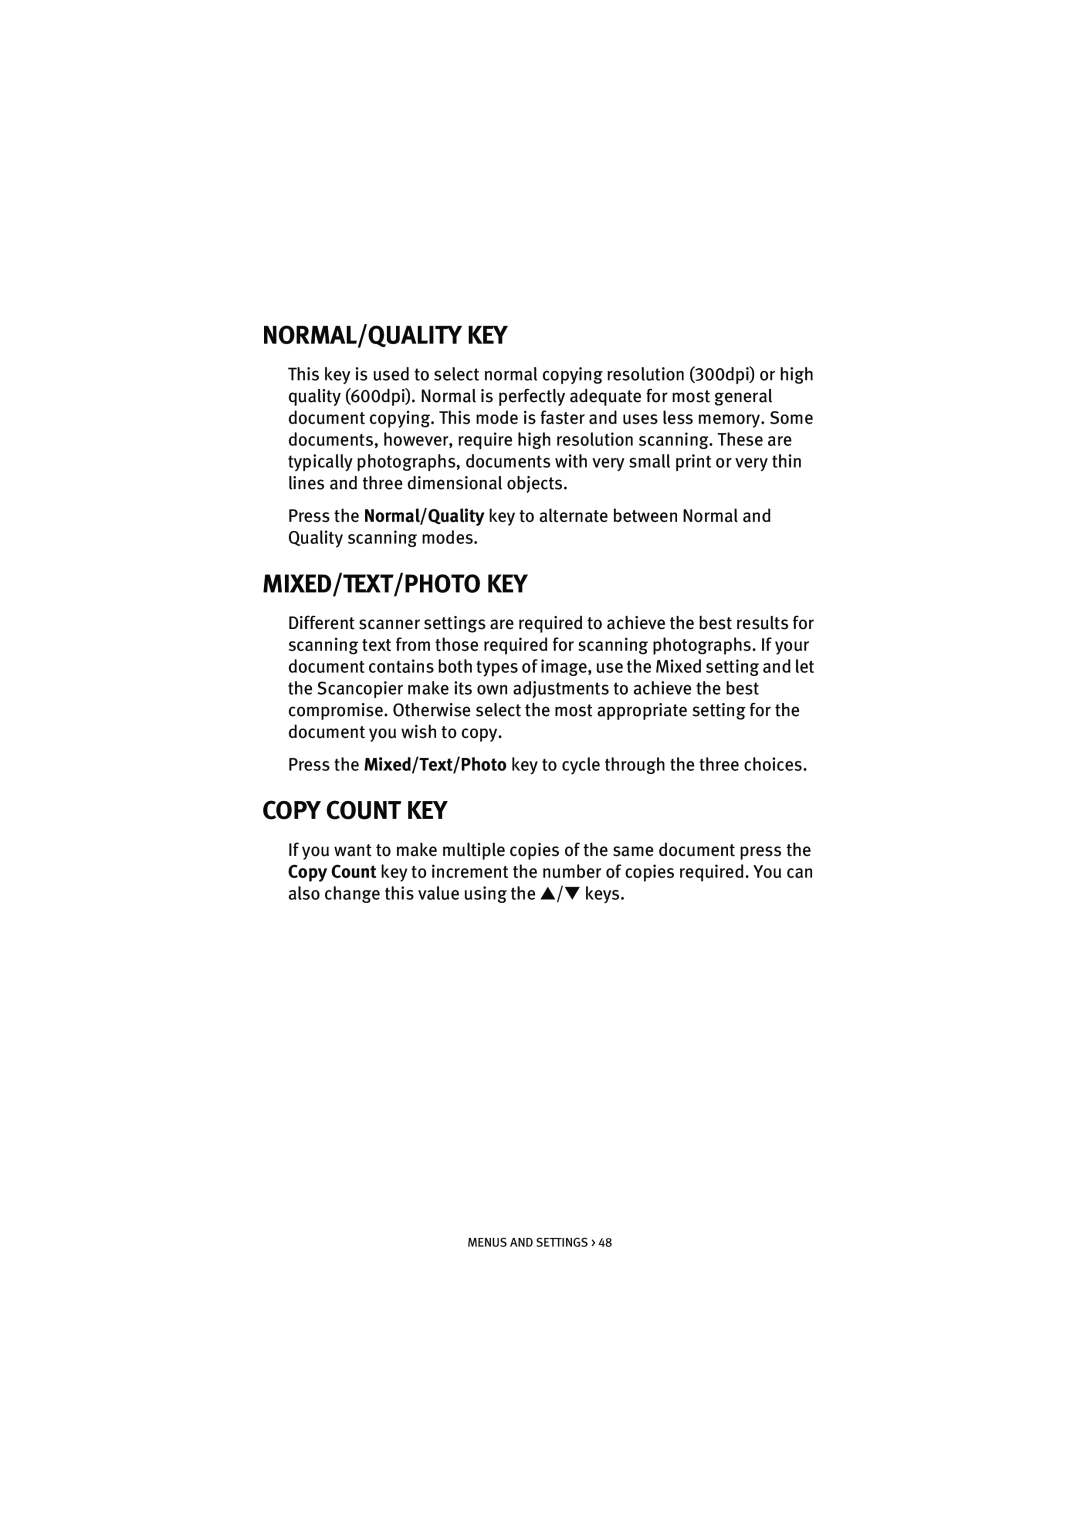 Oki S700 manual Normal/Quality Key, Mixed/Text/Photo Key, Copy Count Key 